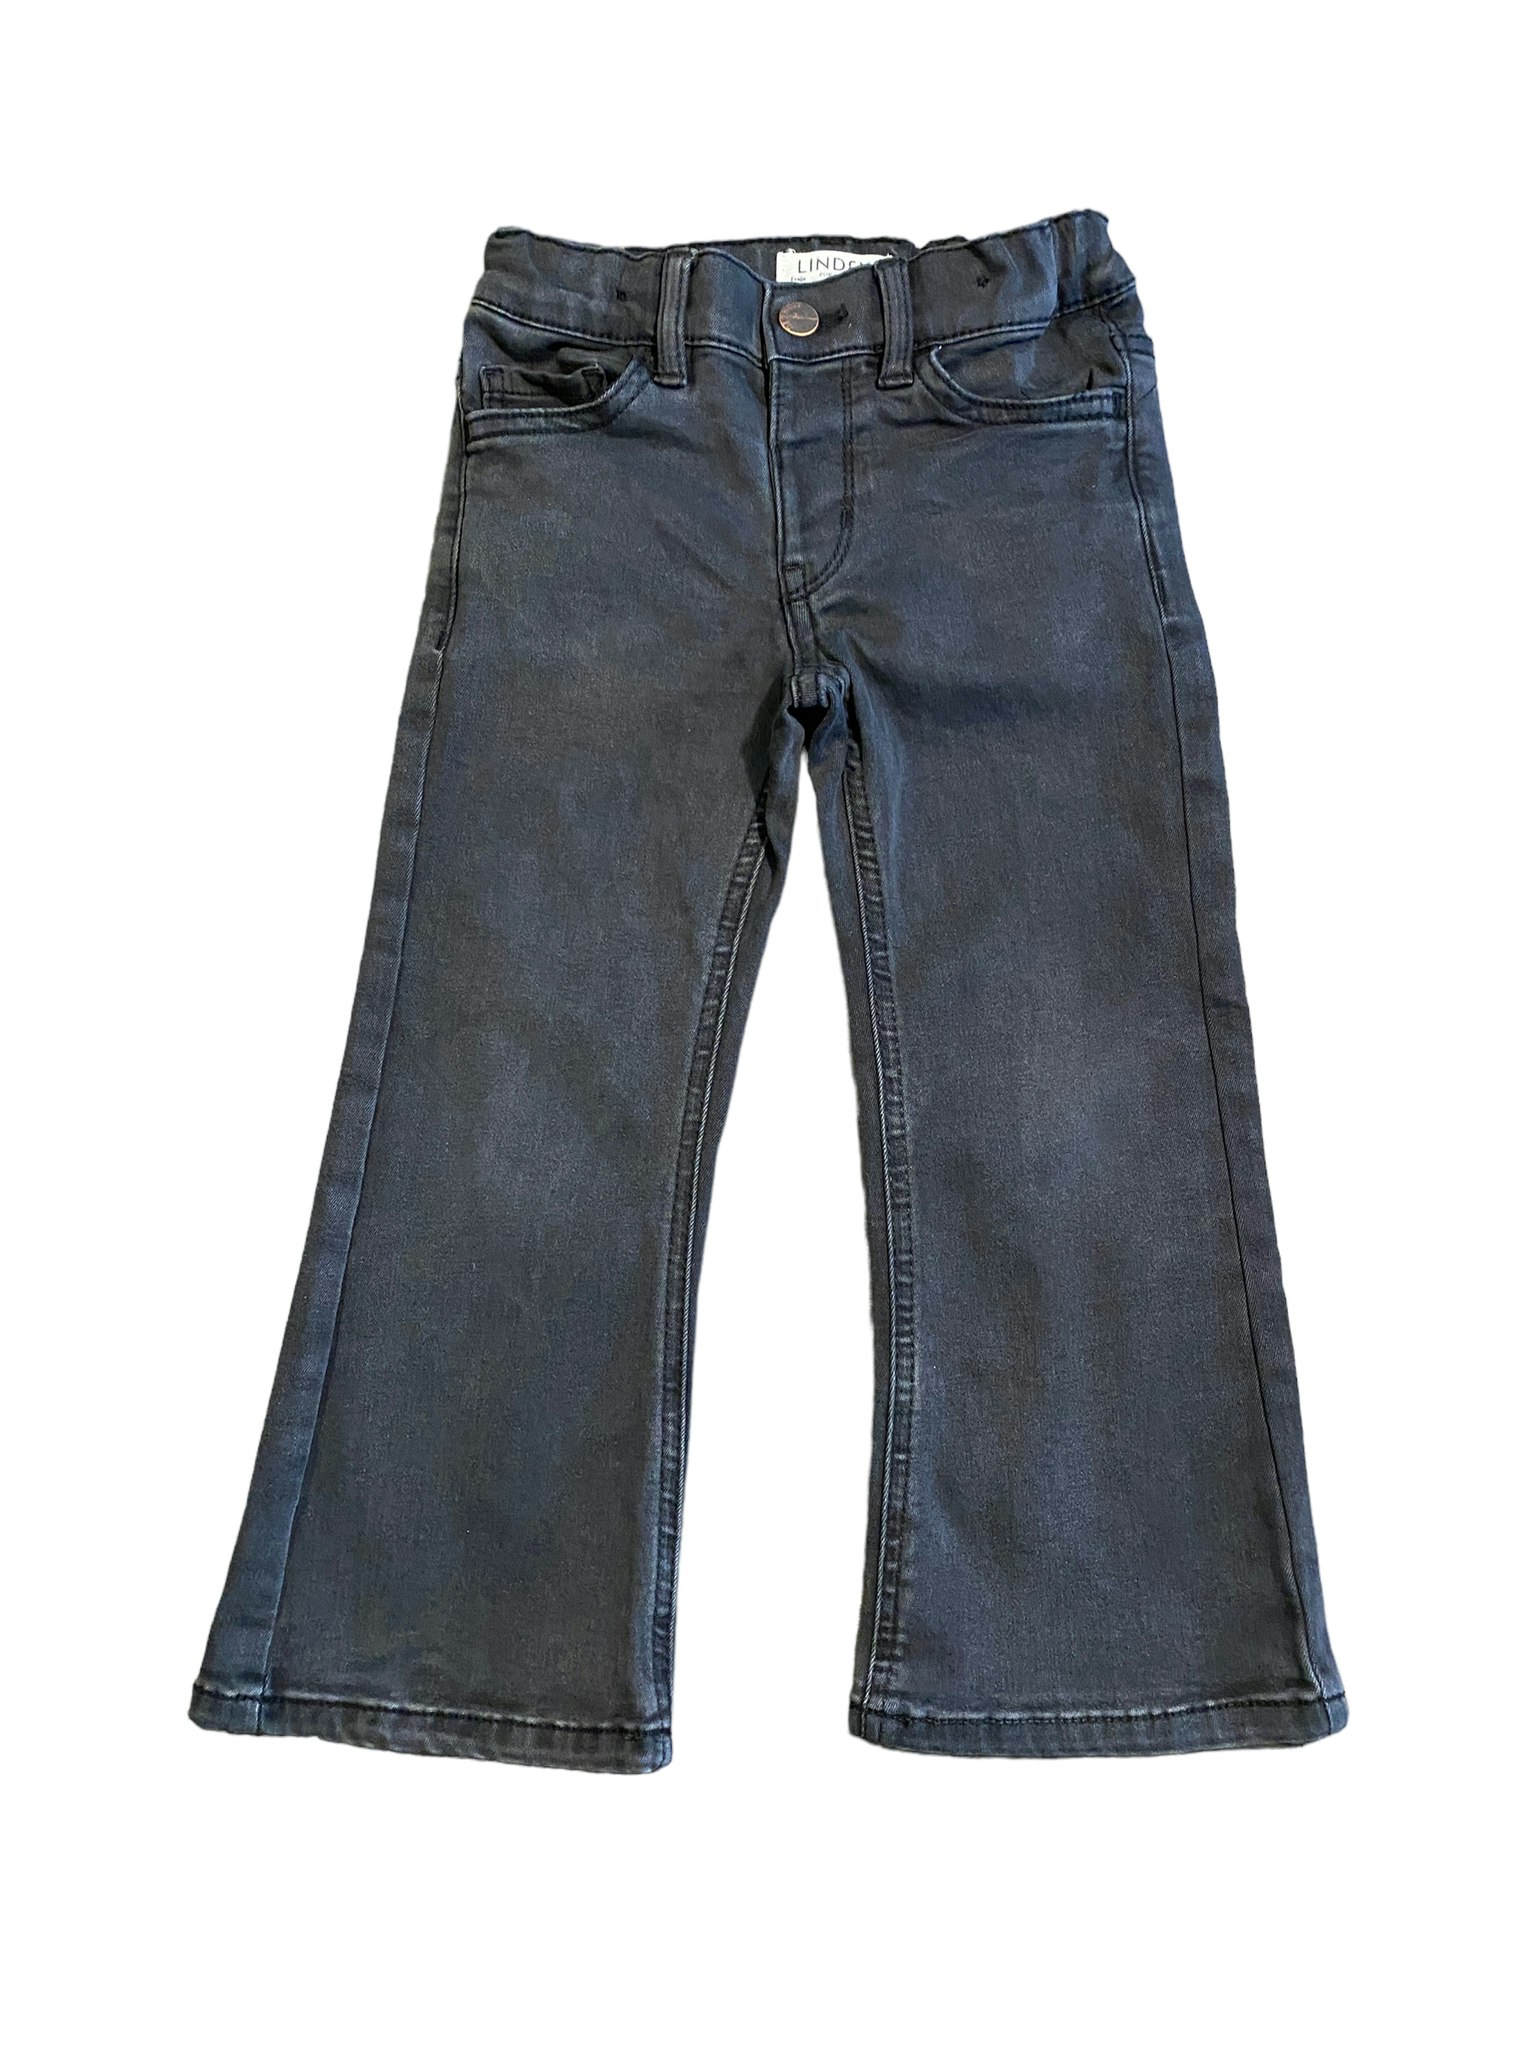 Jeans, Lindex, stl 98